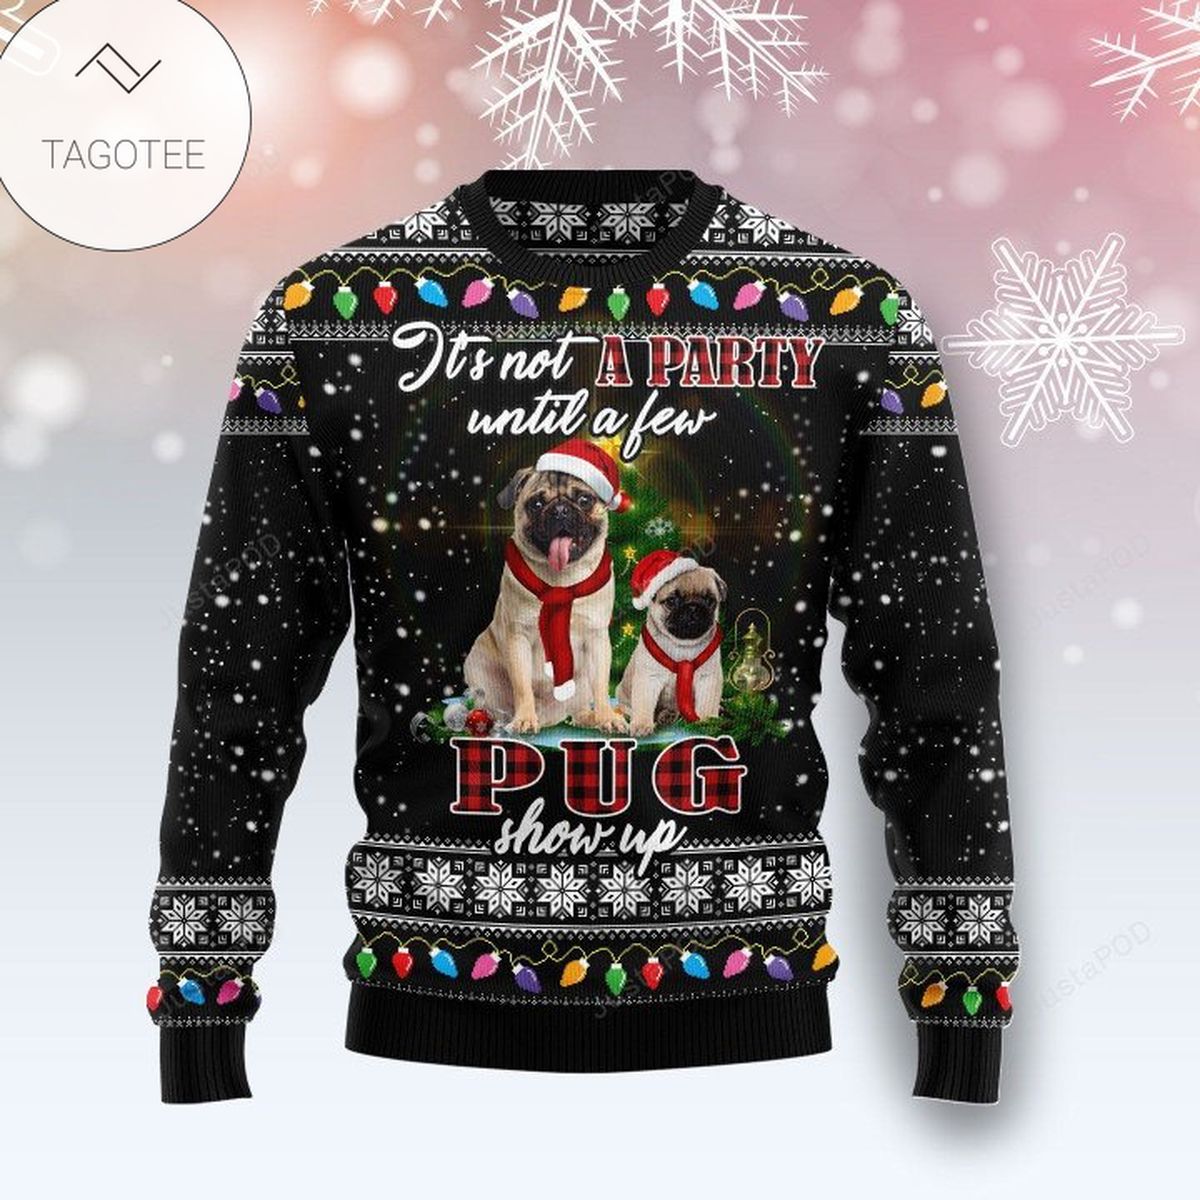 Pug Show Up Ugly Christmas Sweater